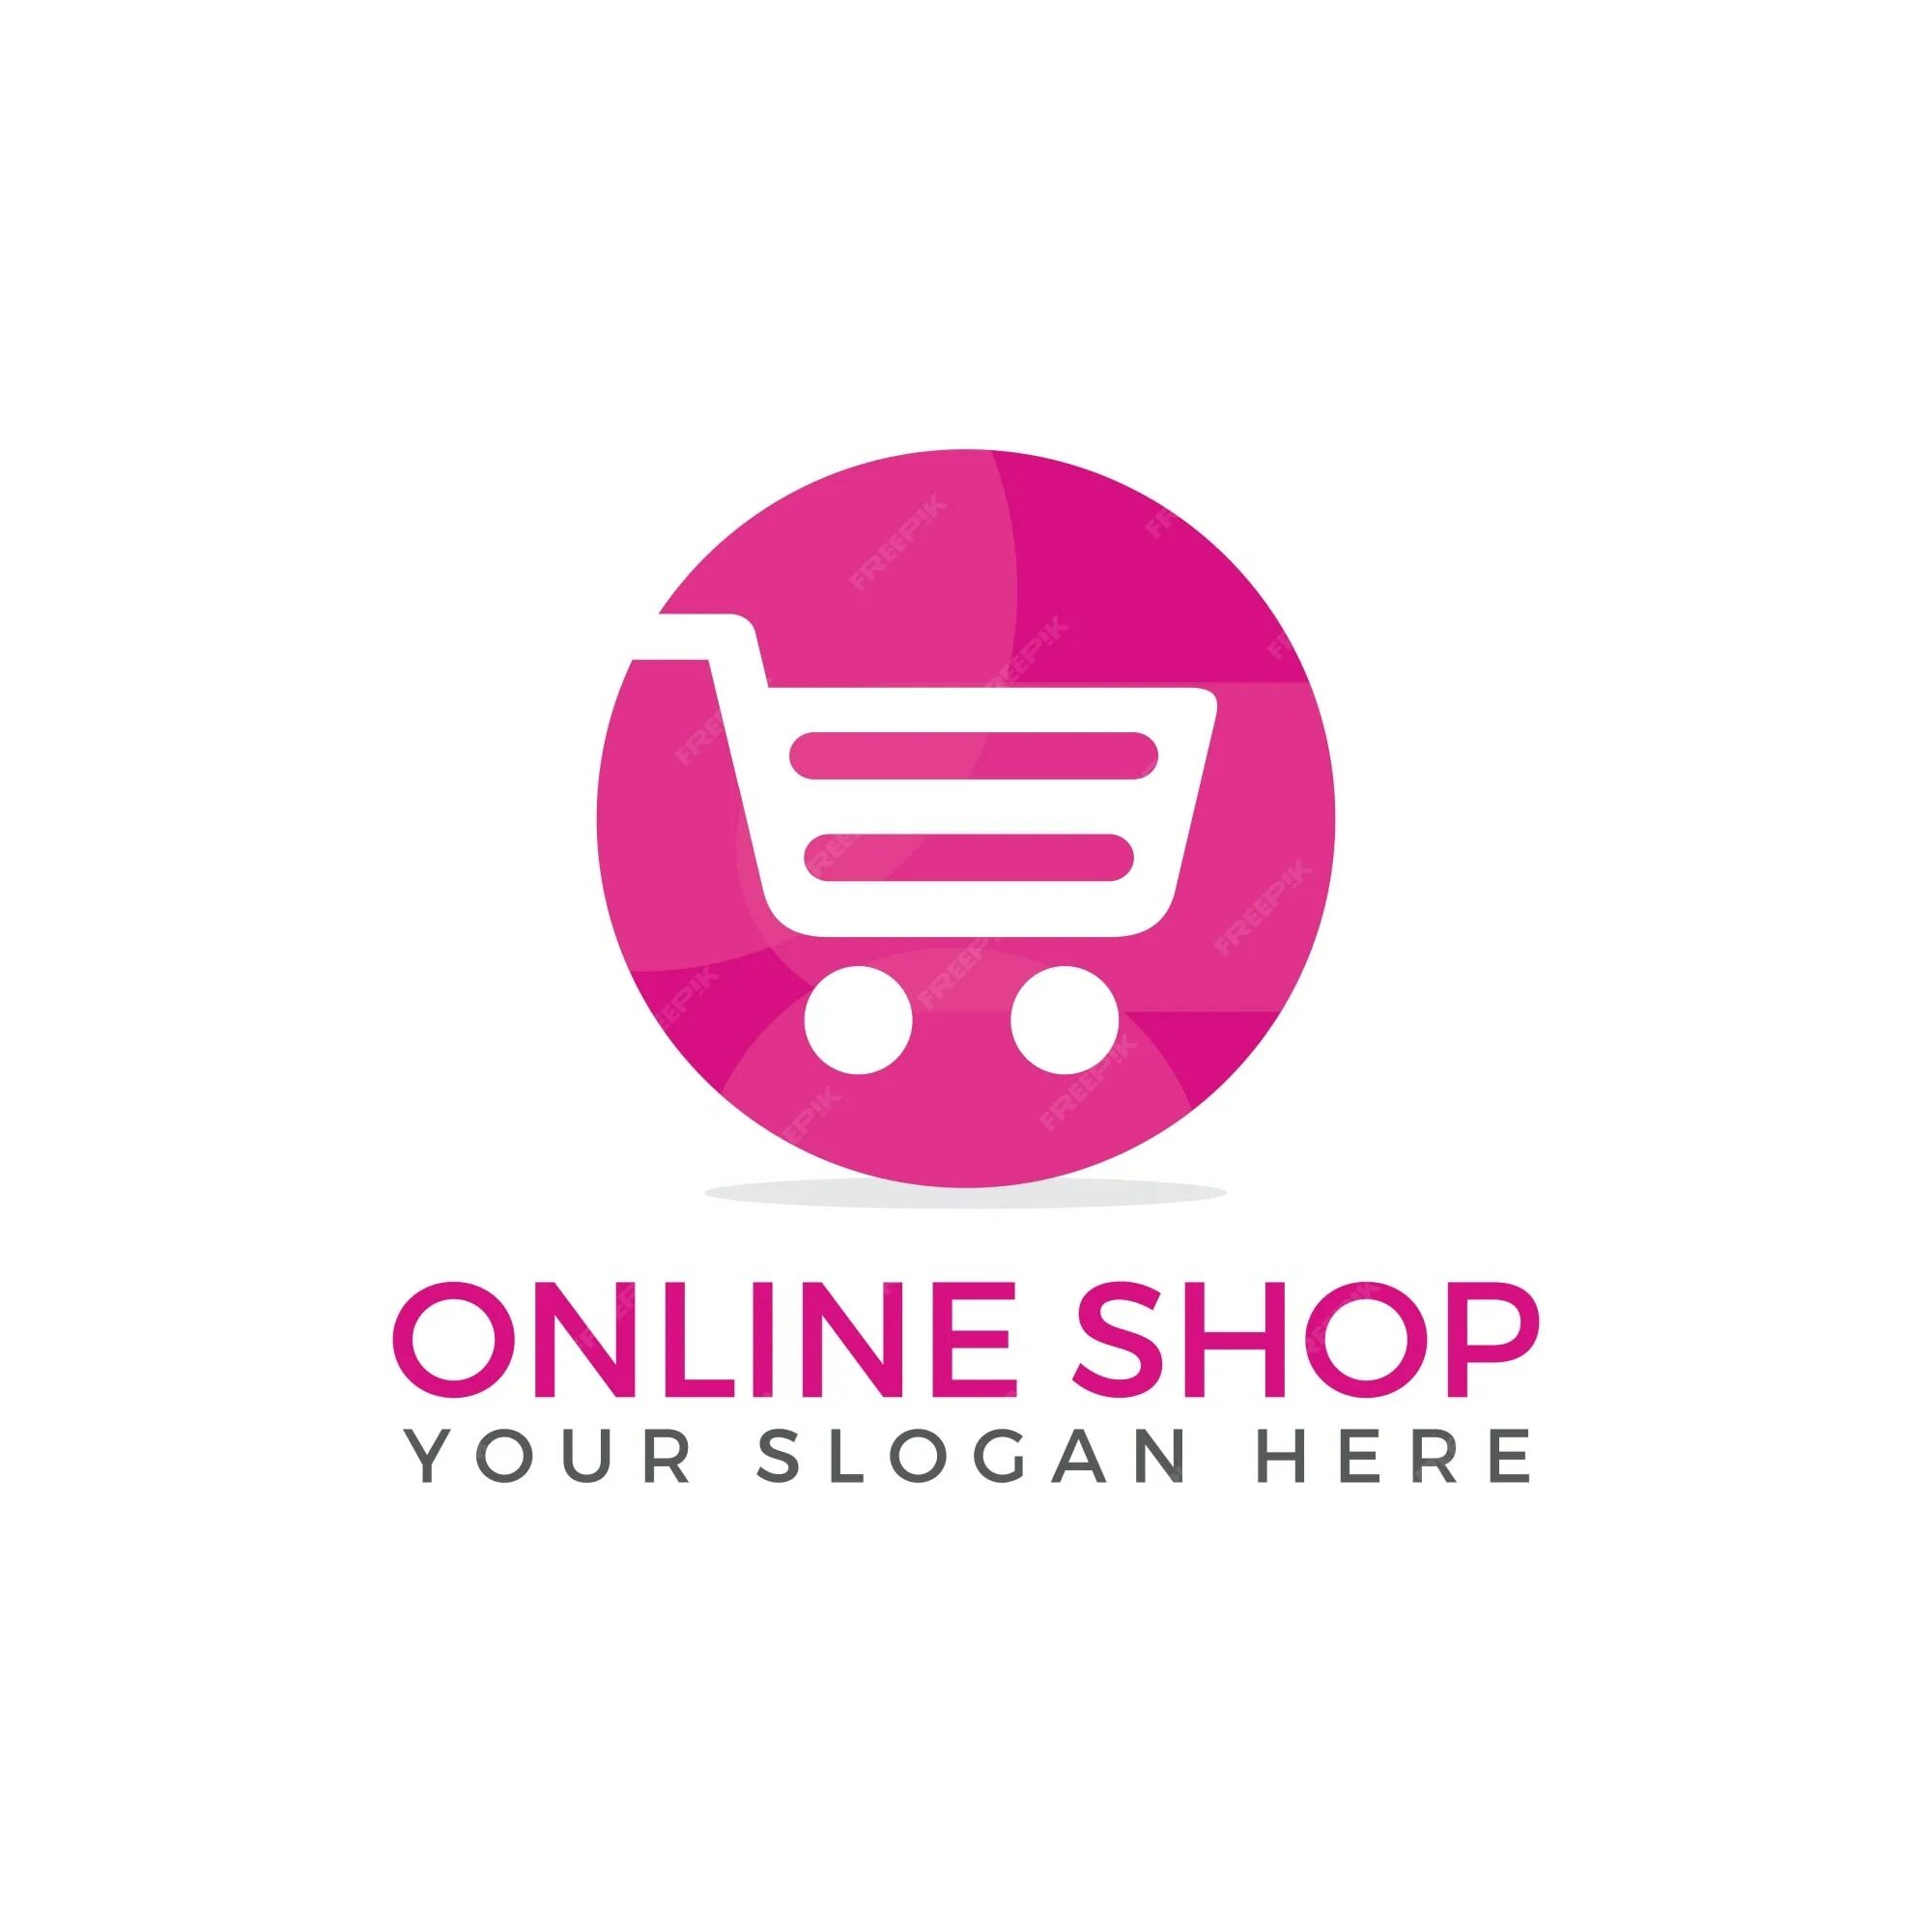 Лого интернет магазина. Логотип интернет магазина. Эмблема для интернет магазина. Интернет магазин лого.